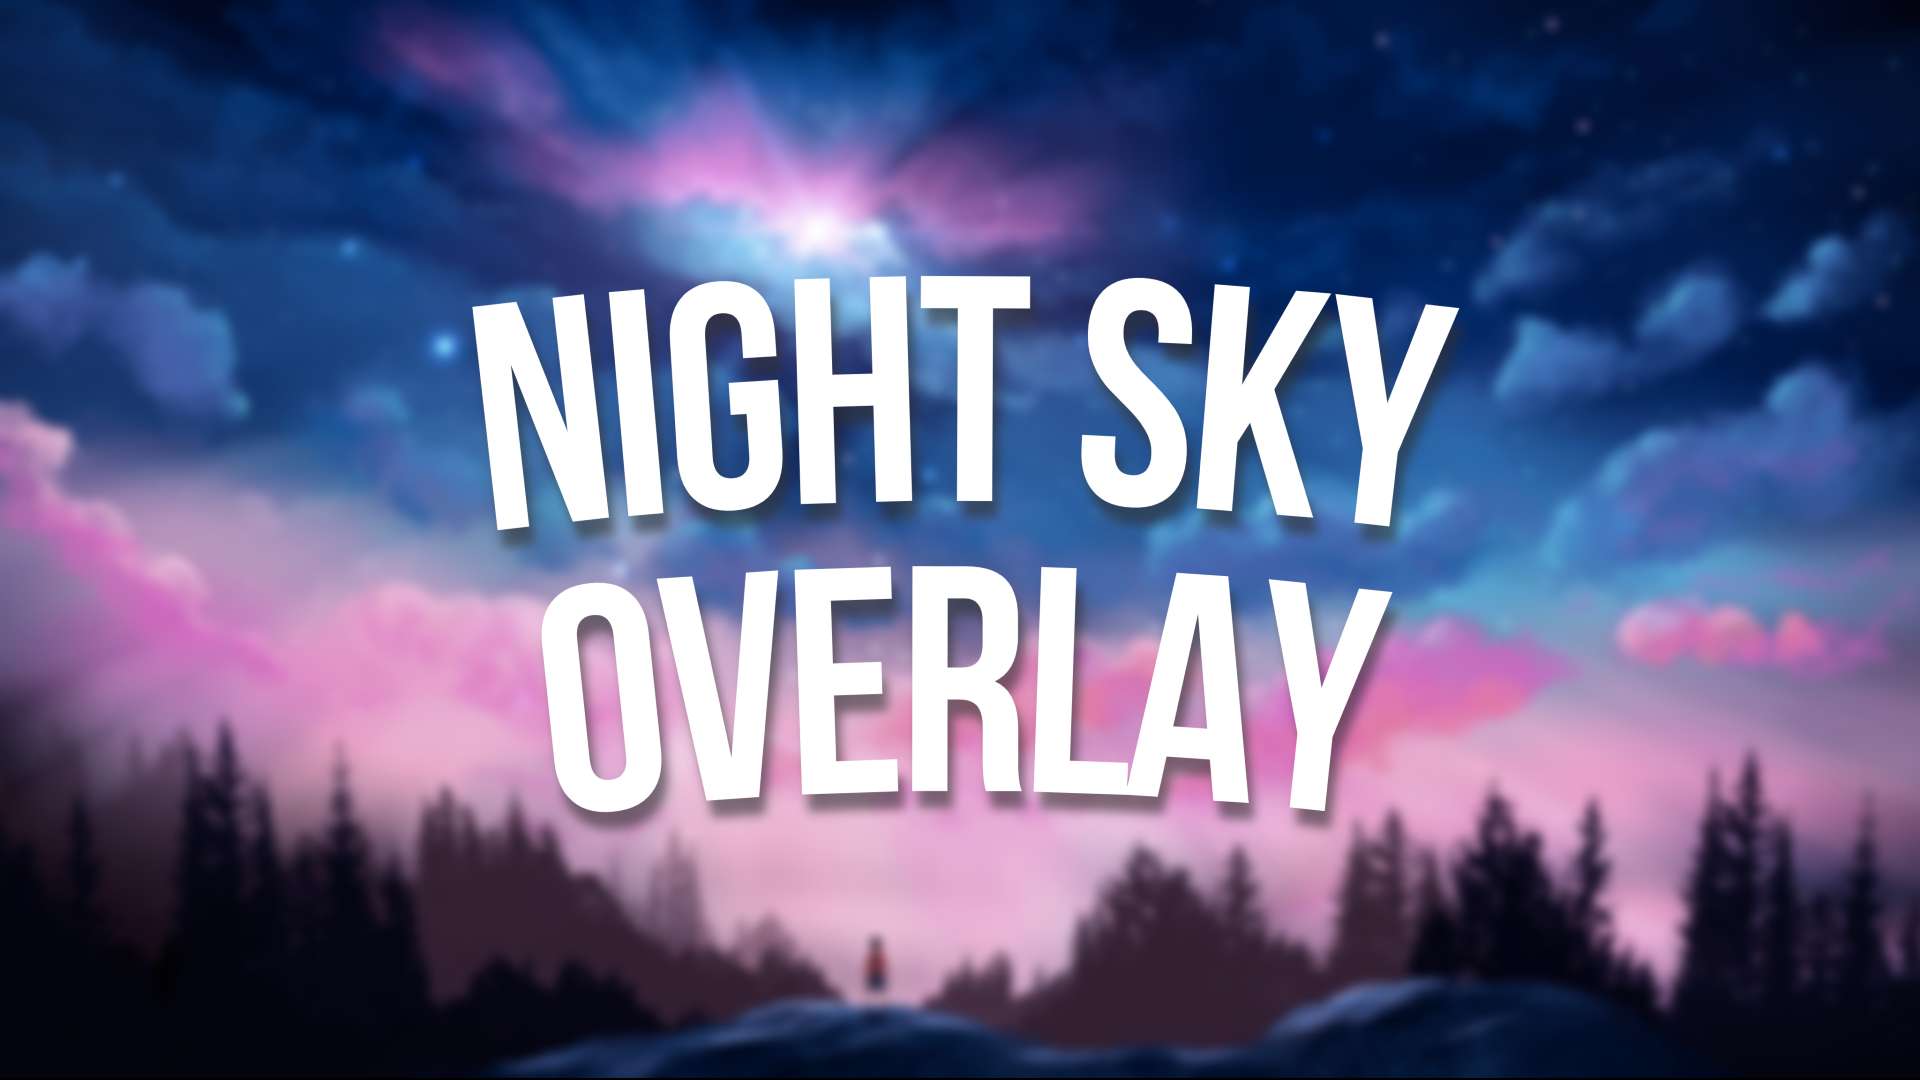 Night Sky Overlay #4 16 by rh56 on PvPRP